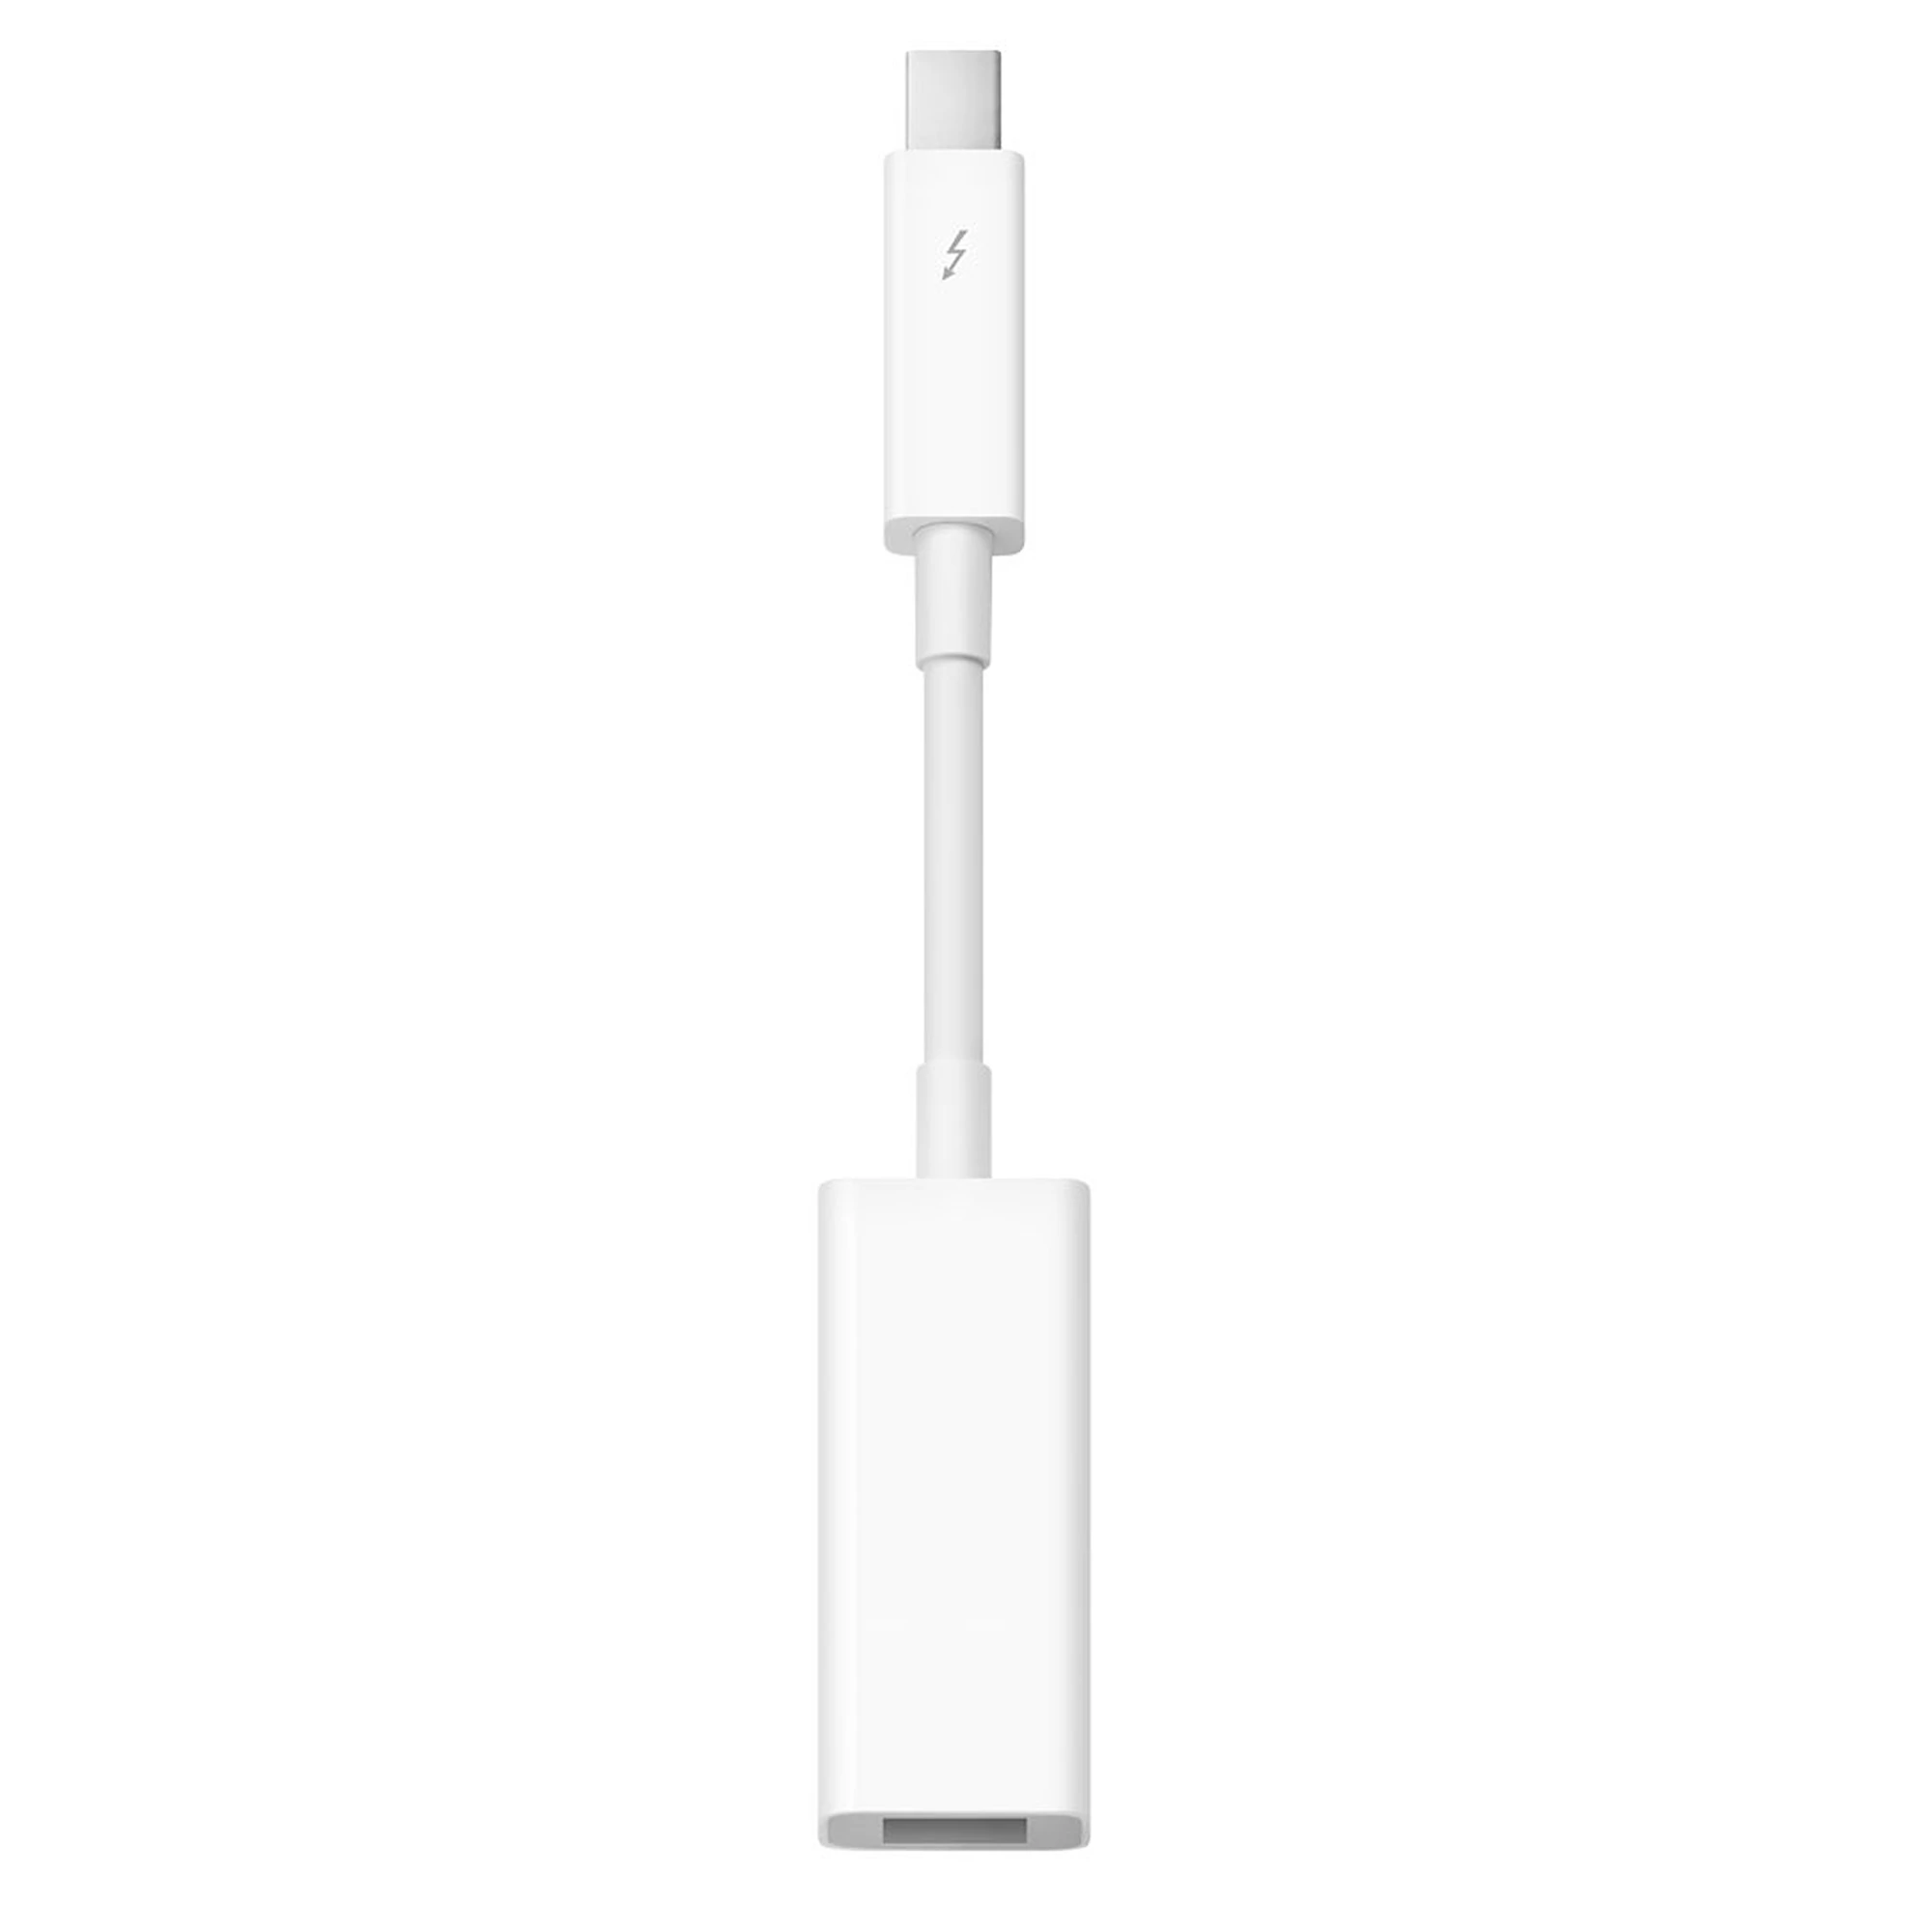 Адаптер Apple Thunderbolt to FireWire Adapter (MD464)